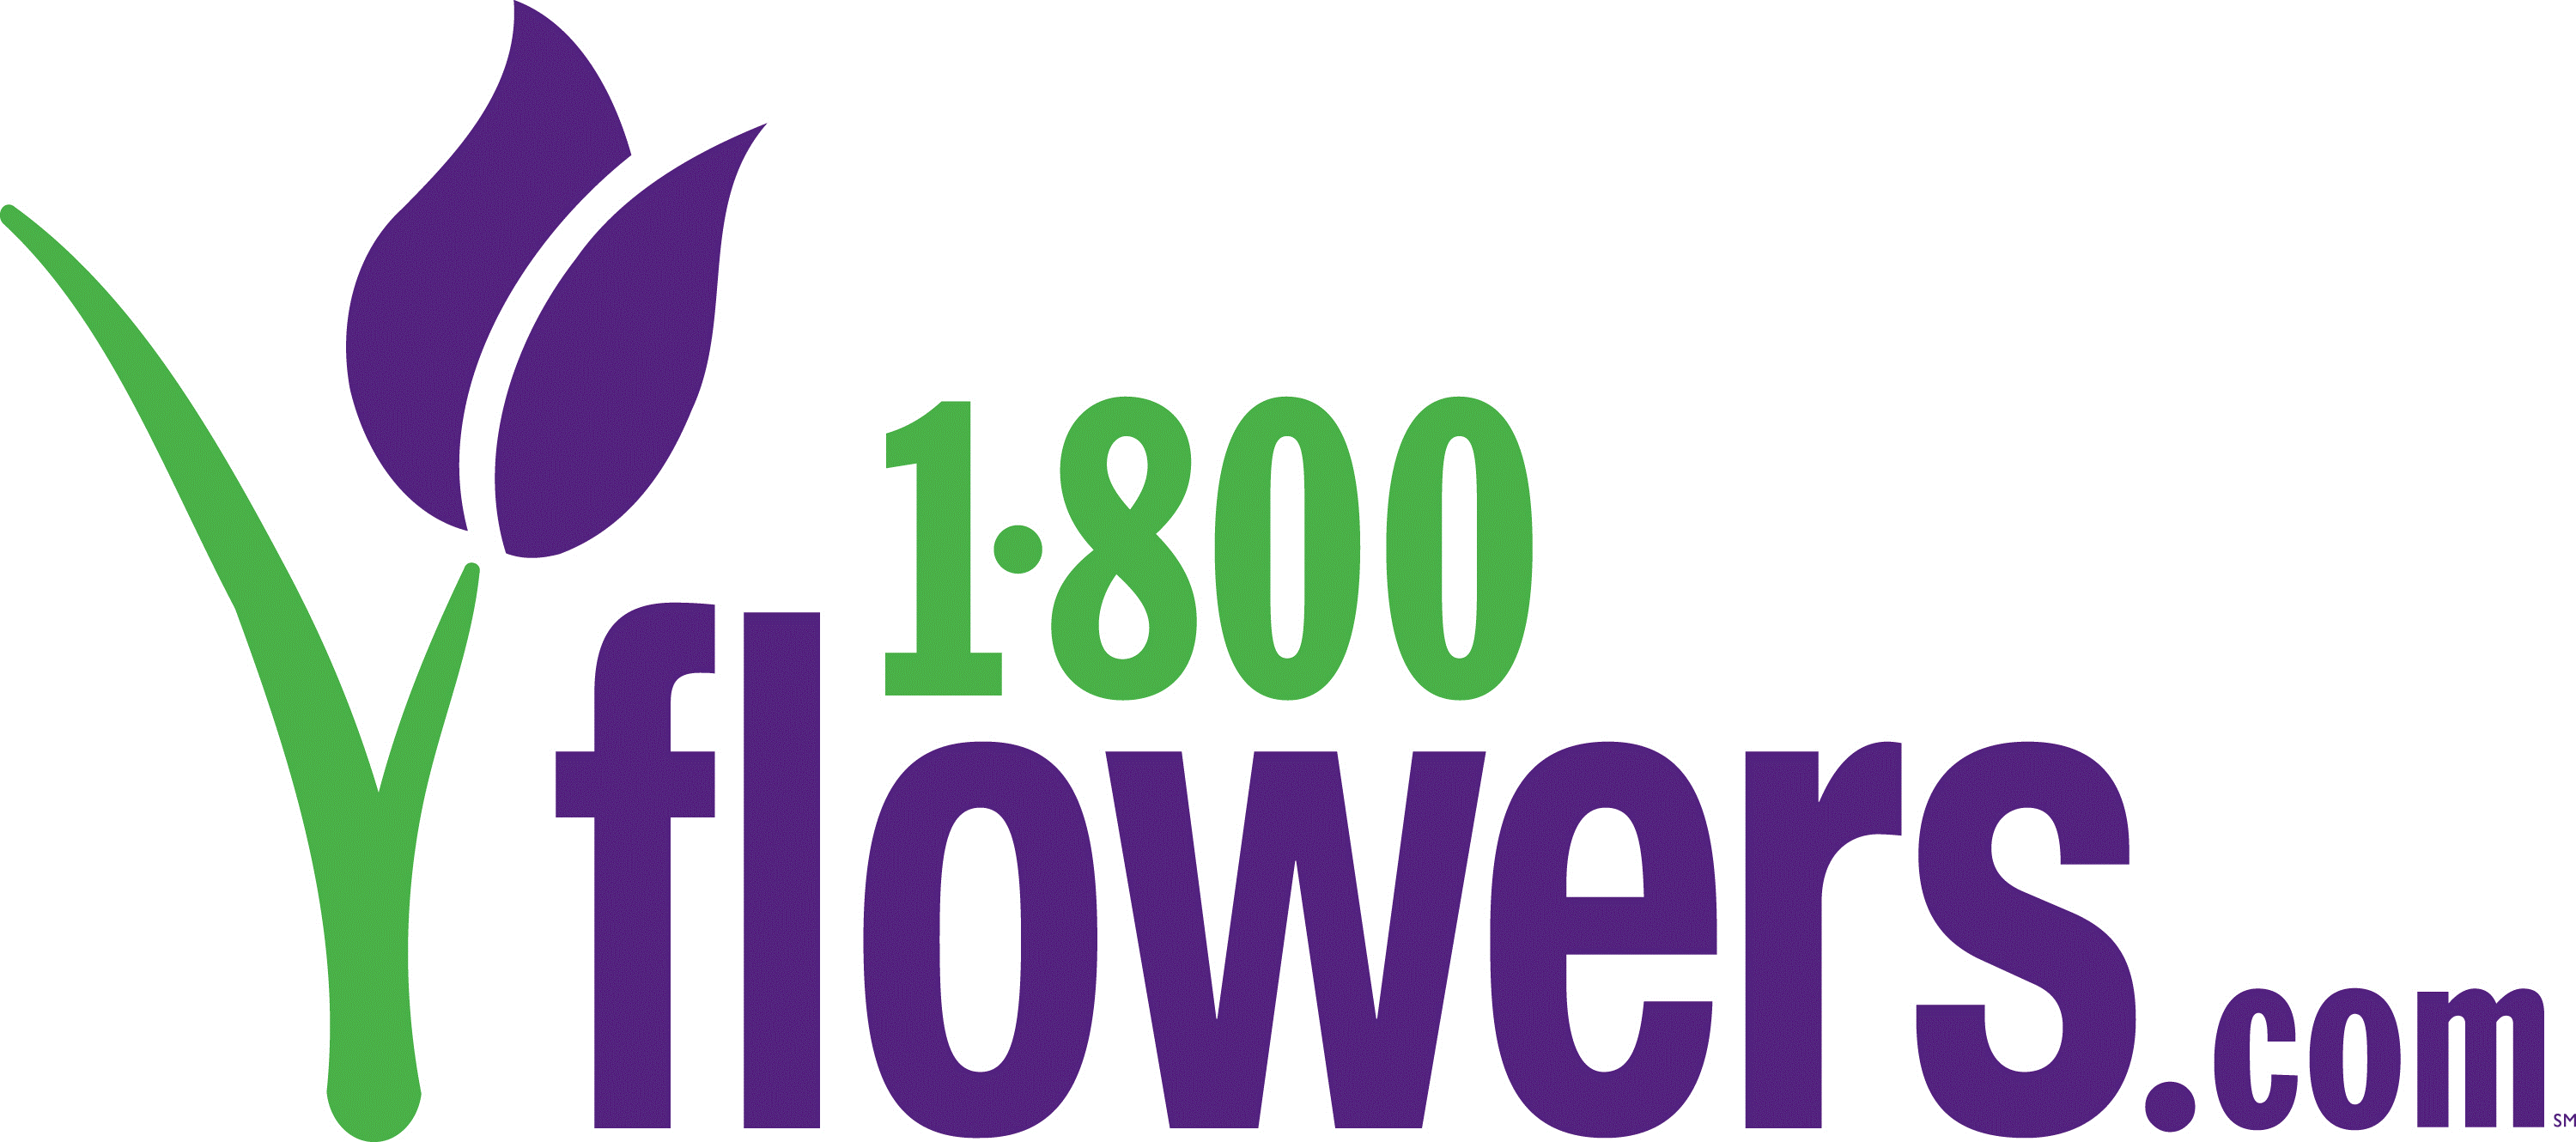 1800+flowers